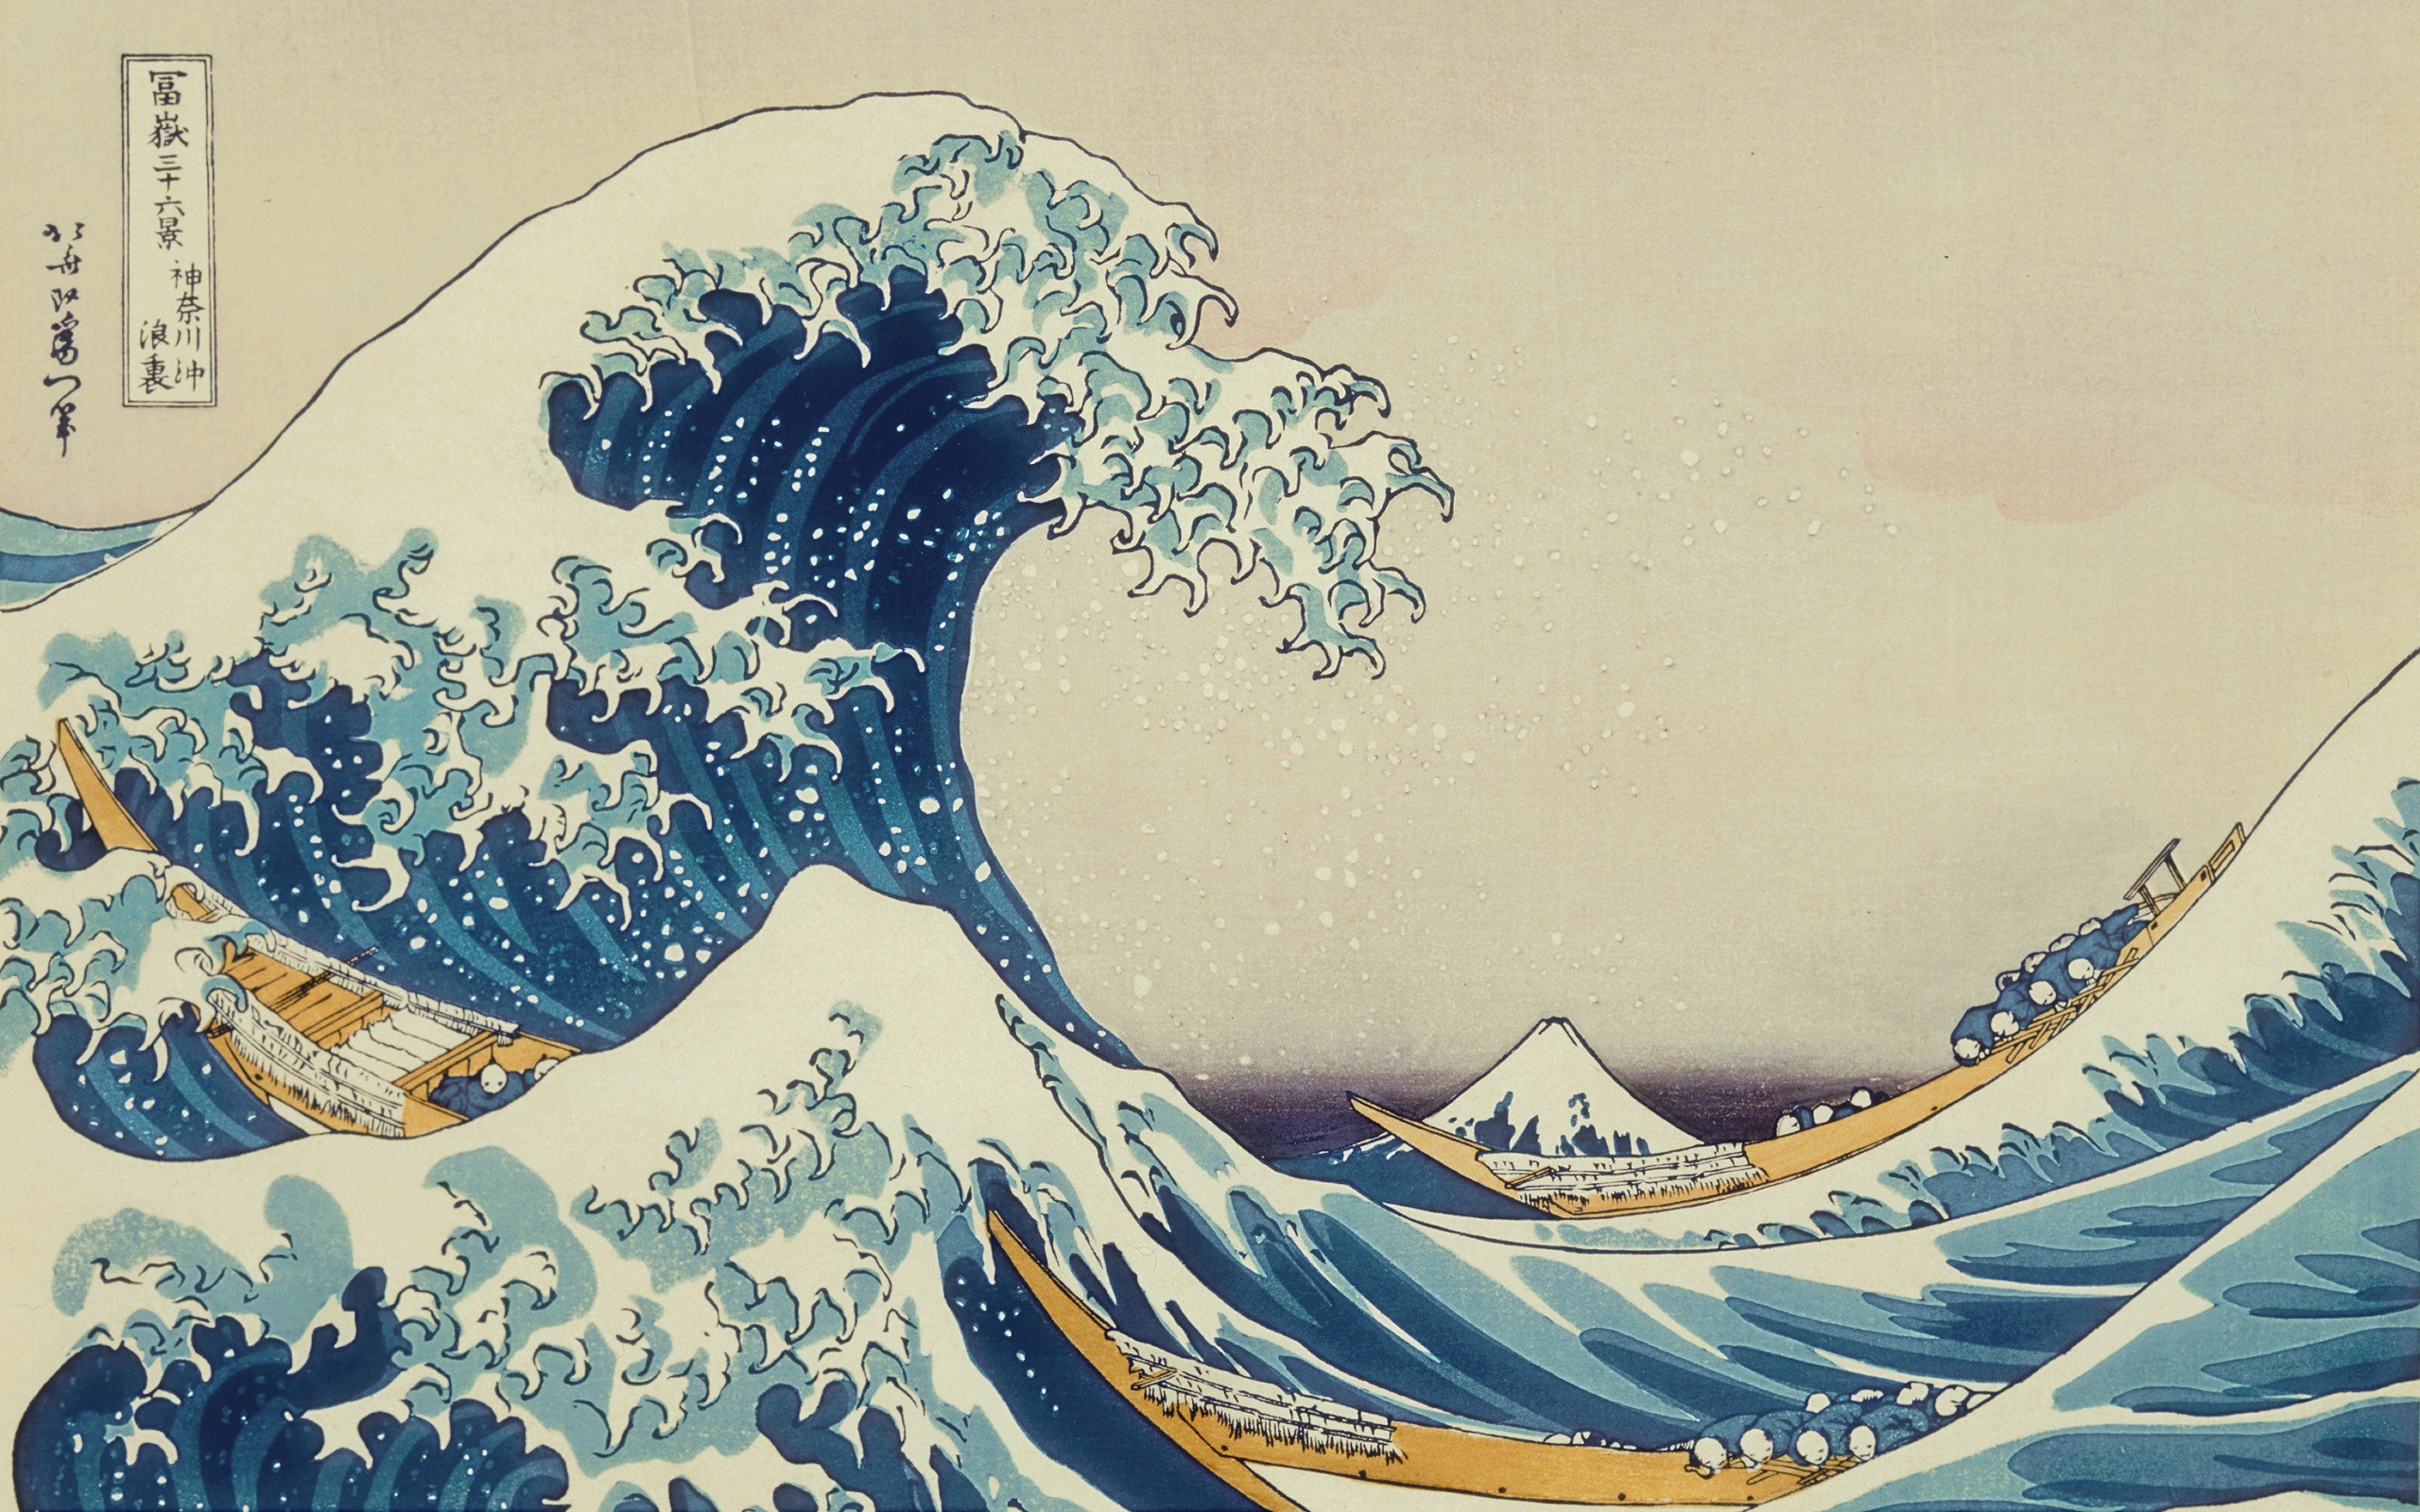 The Great Wave Off Kanagawa Painting Waves Japanese Classic Art Artwork 2560x1600